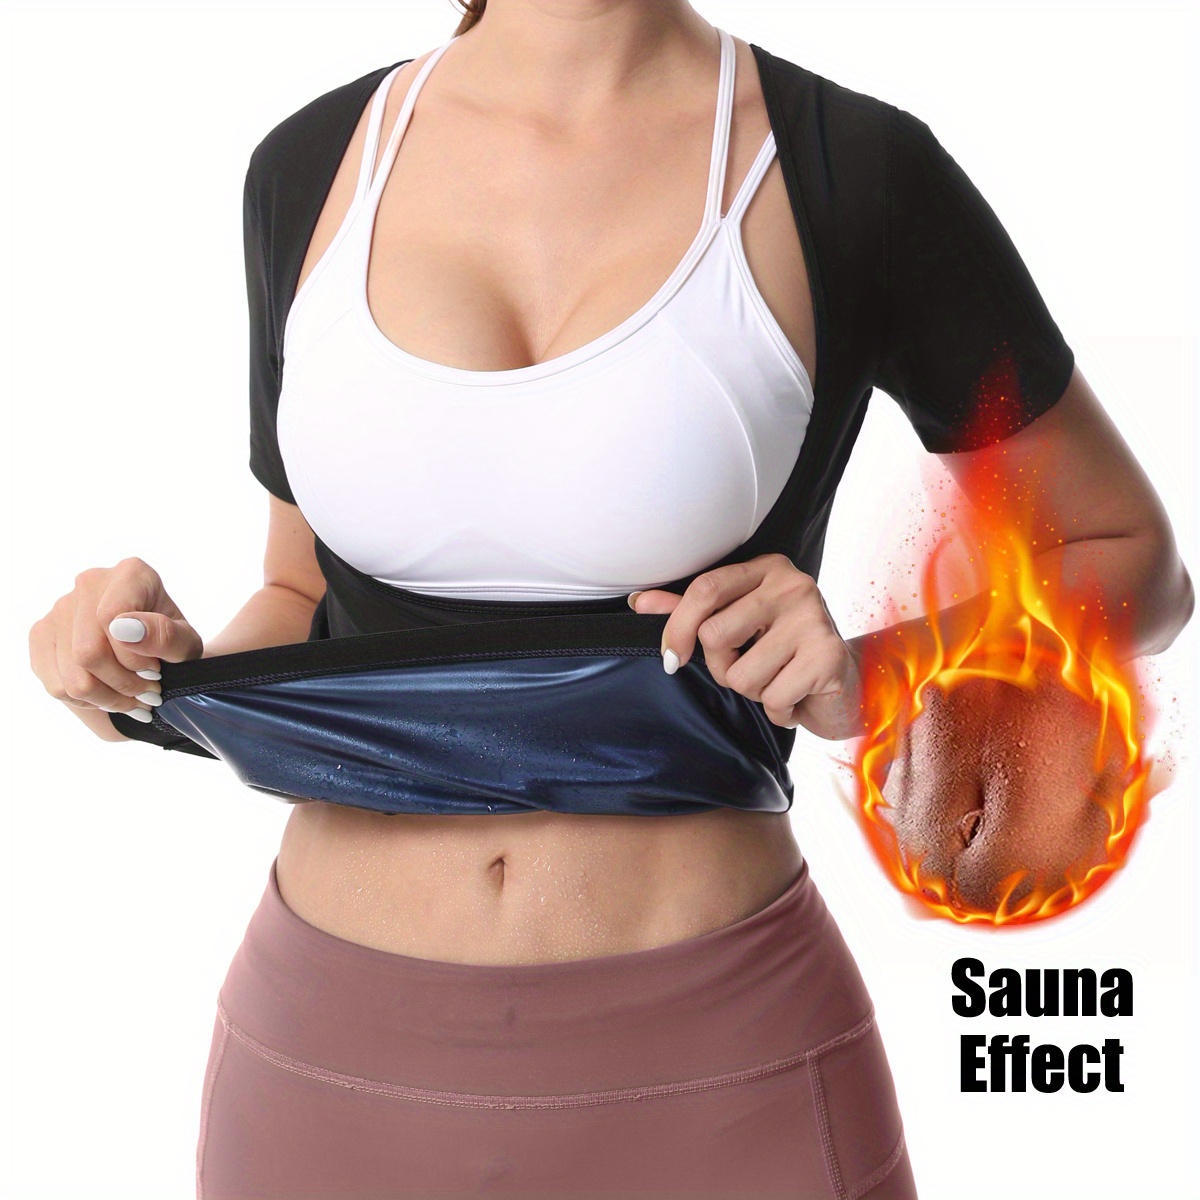 Shape Your Waist & Burn Fat Instantly with Women's Sauna Waist Trainer!